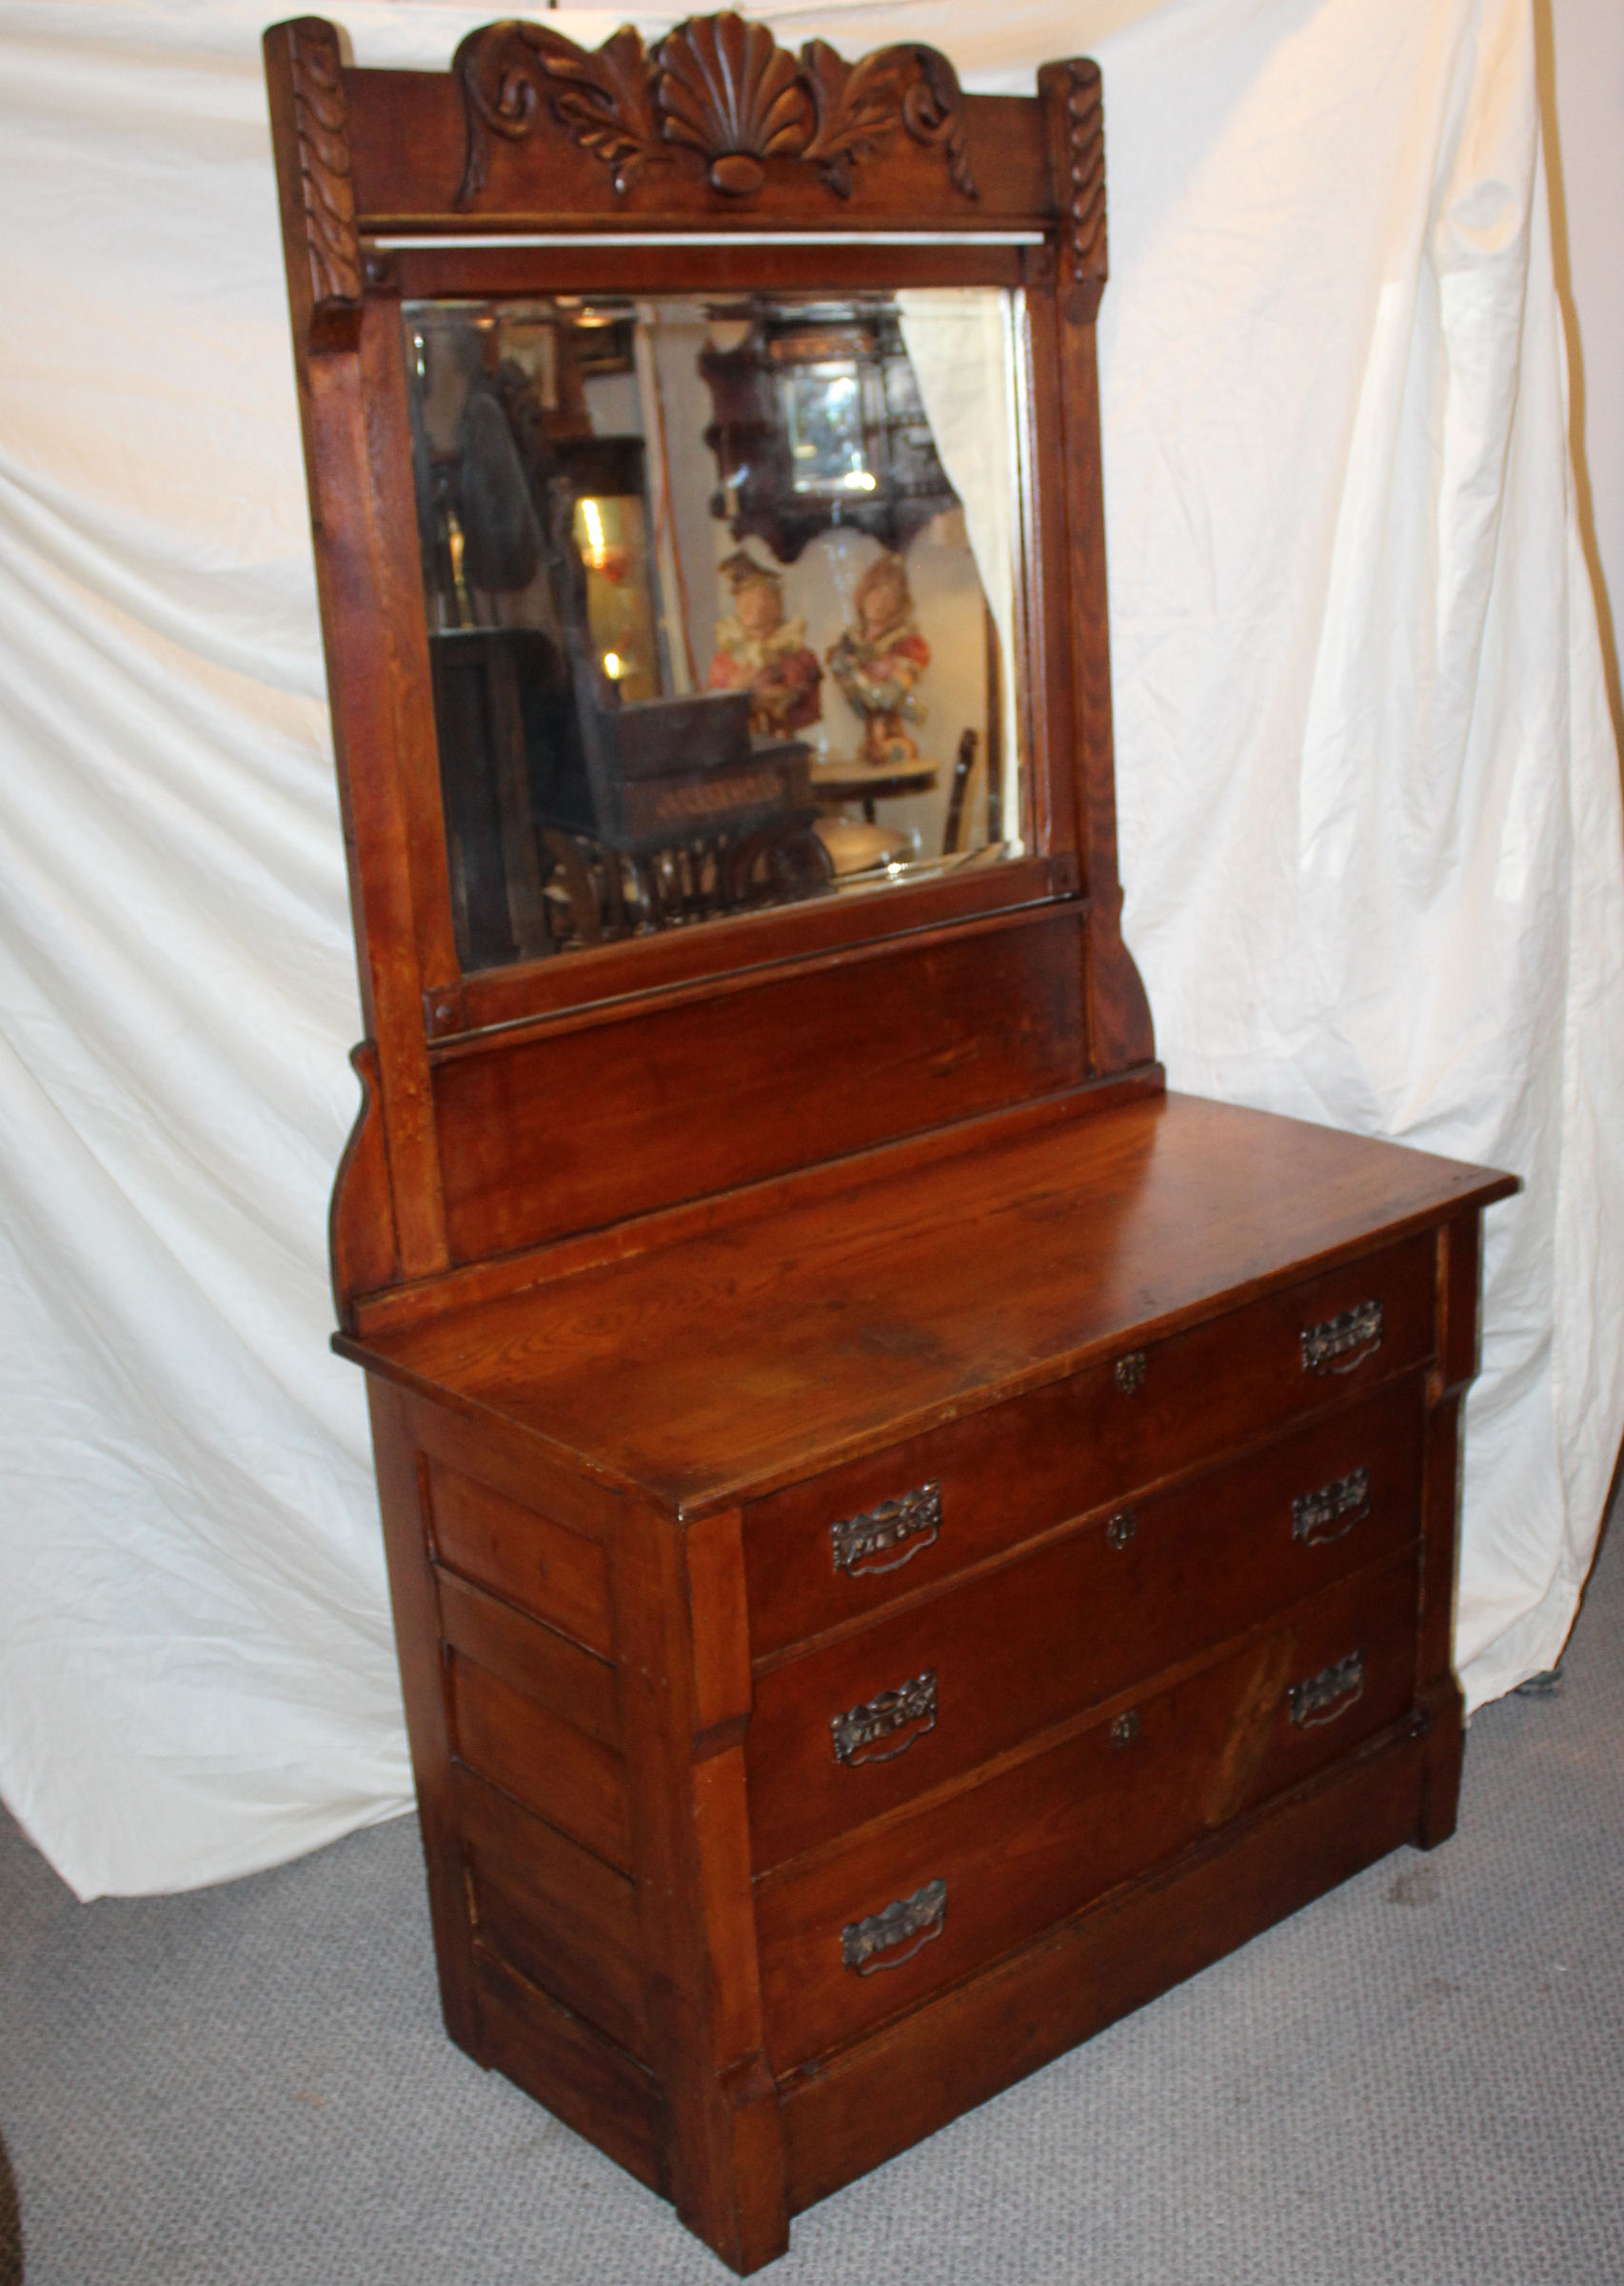 Bargain John S Antiques Antique Wood Dresser Chest With Mirror Original Finish Bargain John S Antiques